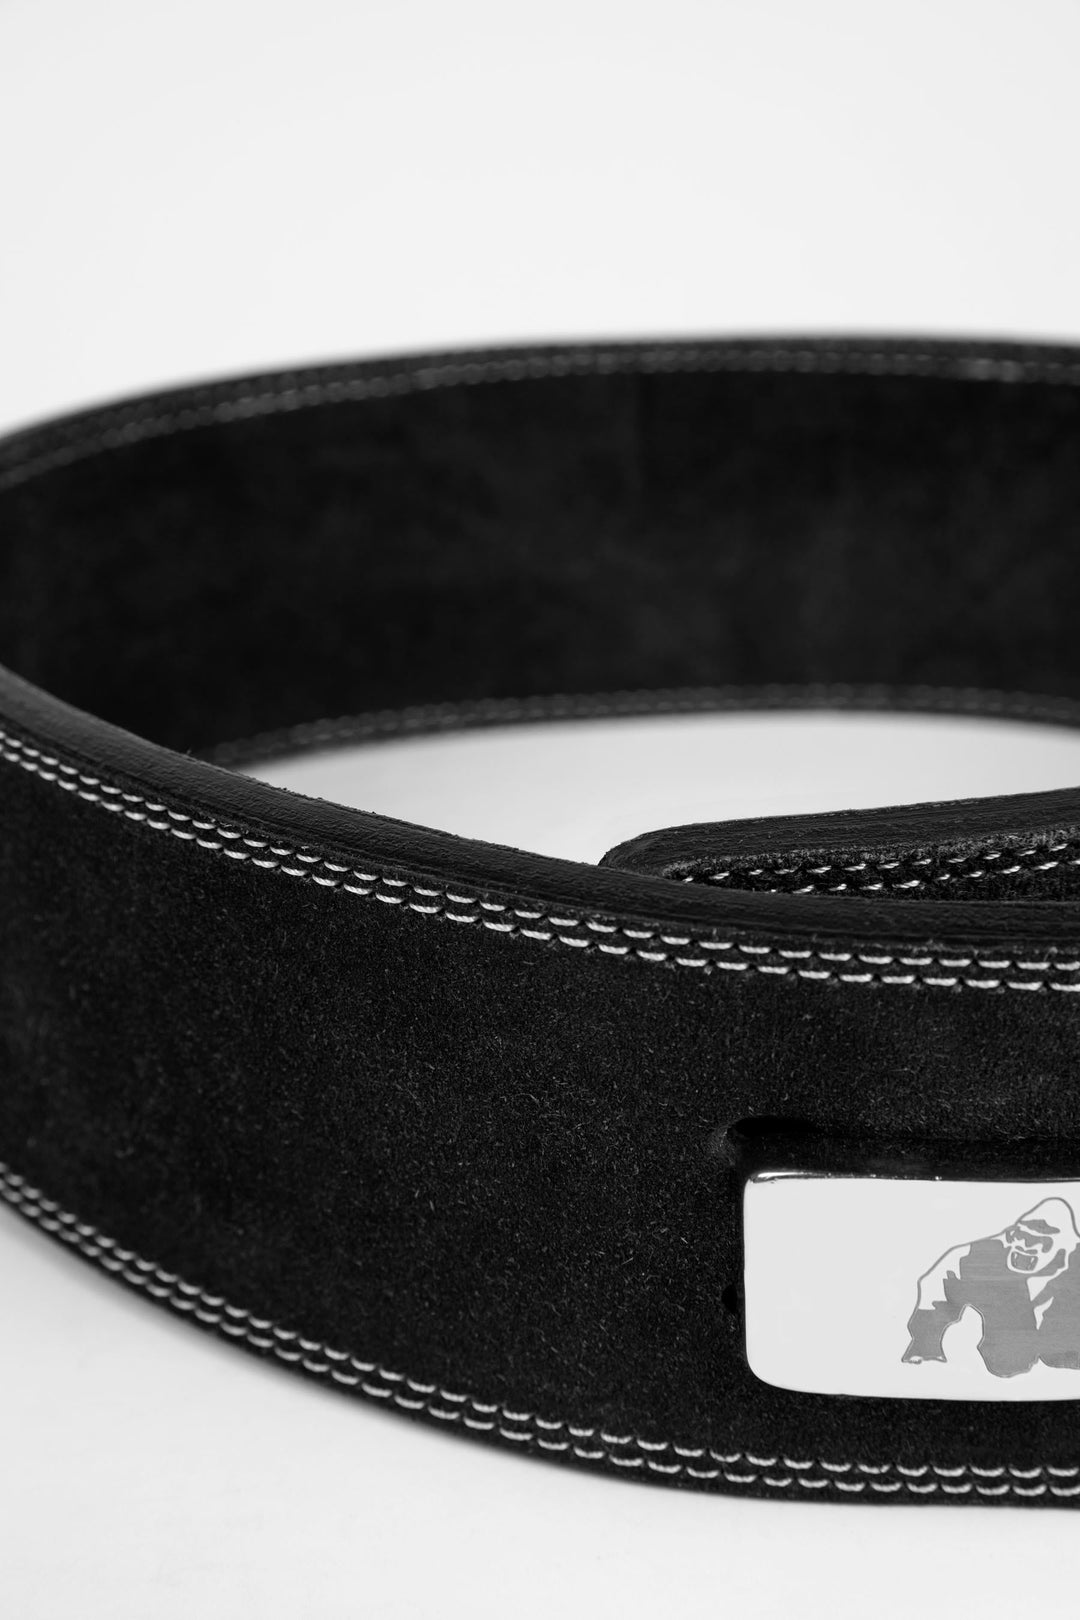 Gorilla Wear 4 Inch Leather Lever Belt - Black